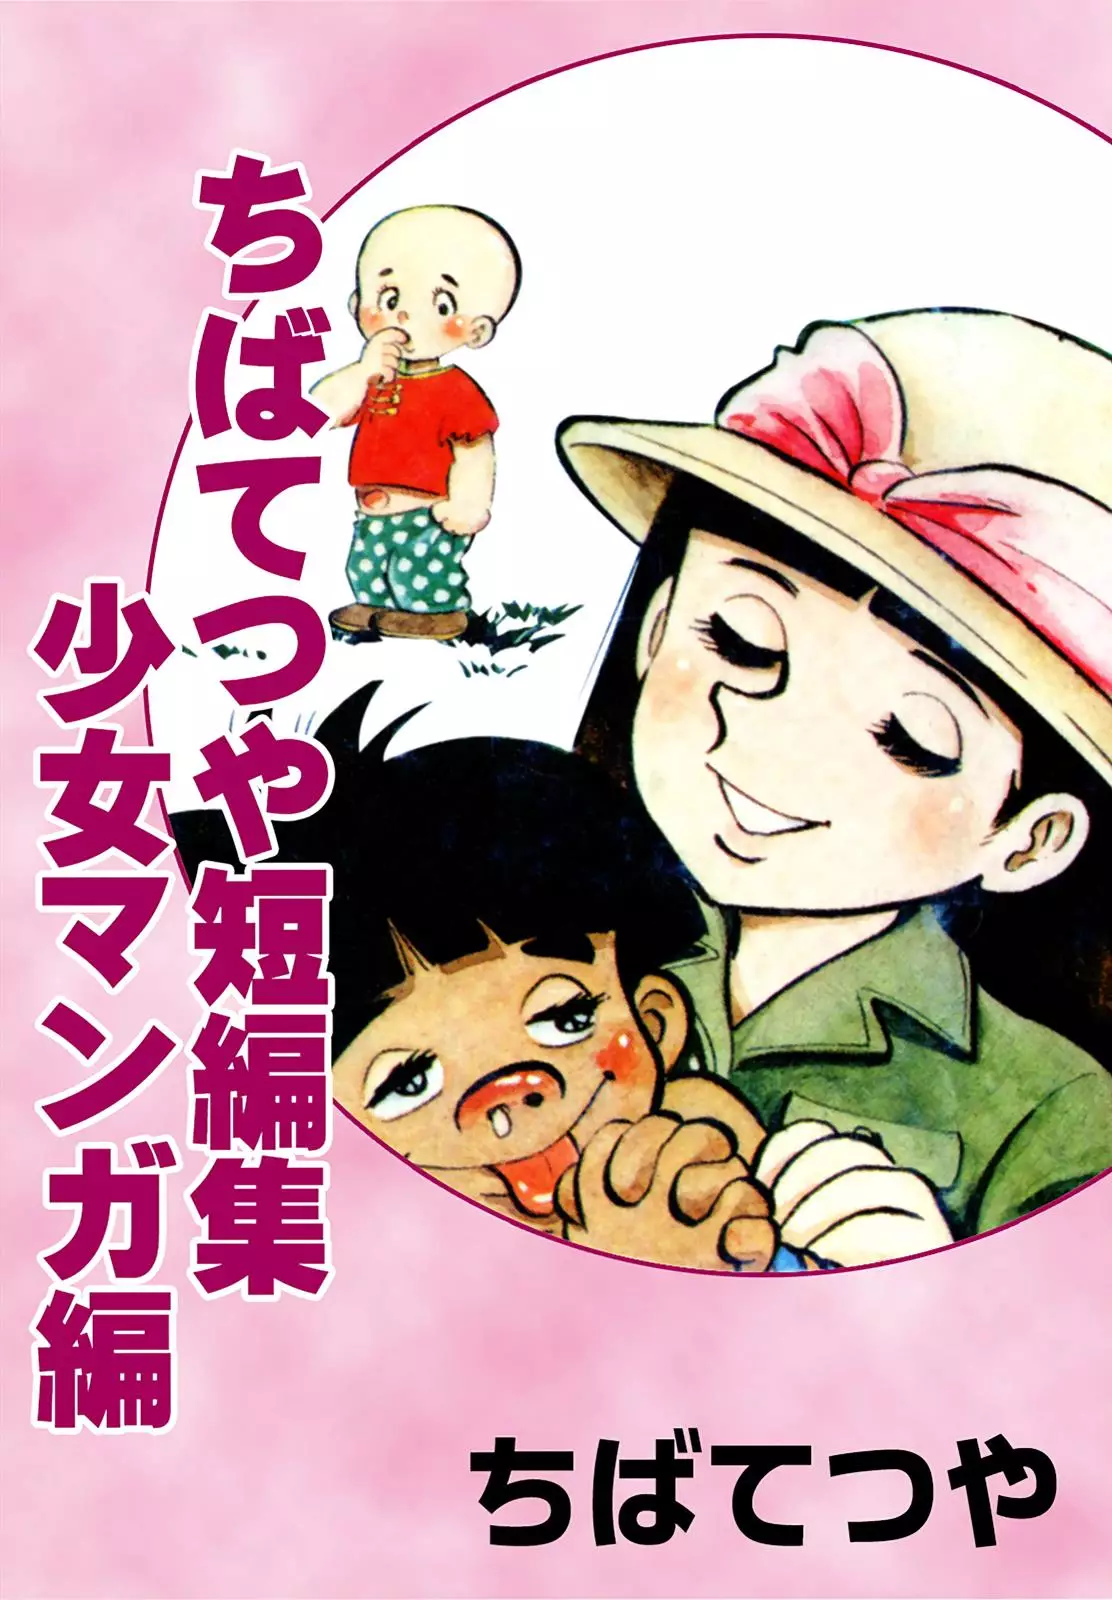 Tetsuya Chiba Short Stories - Shojo Manga - 1 page 1-96cb2d34